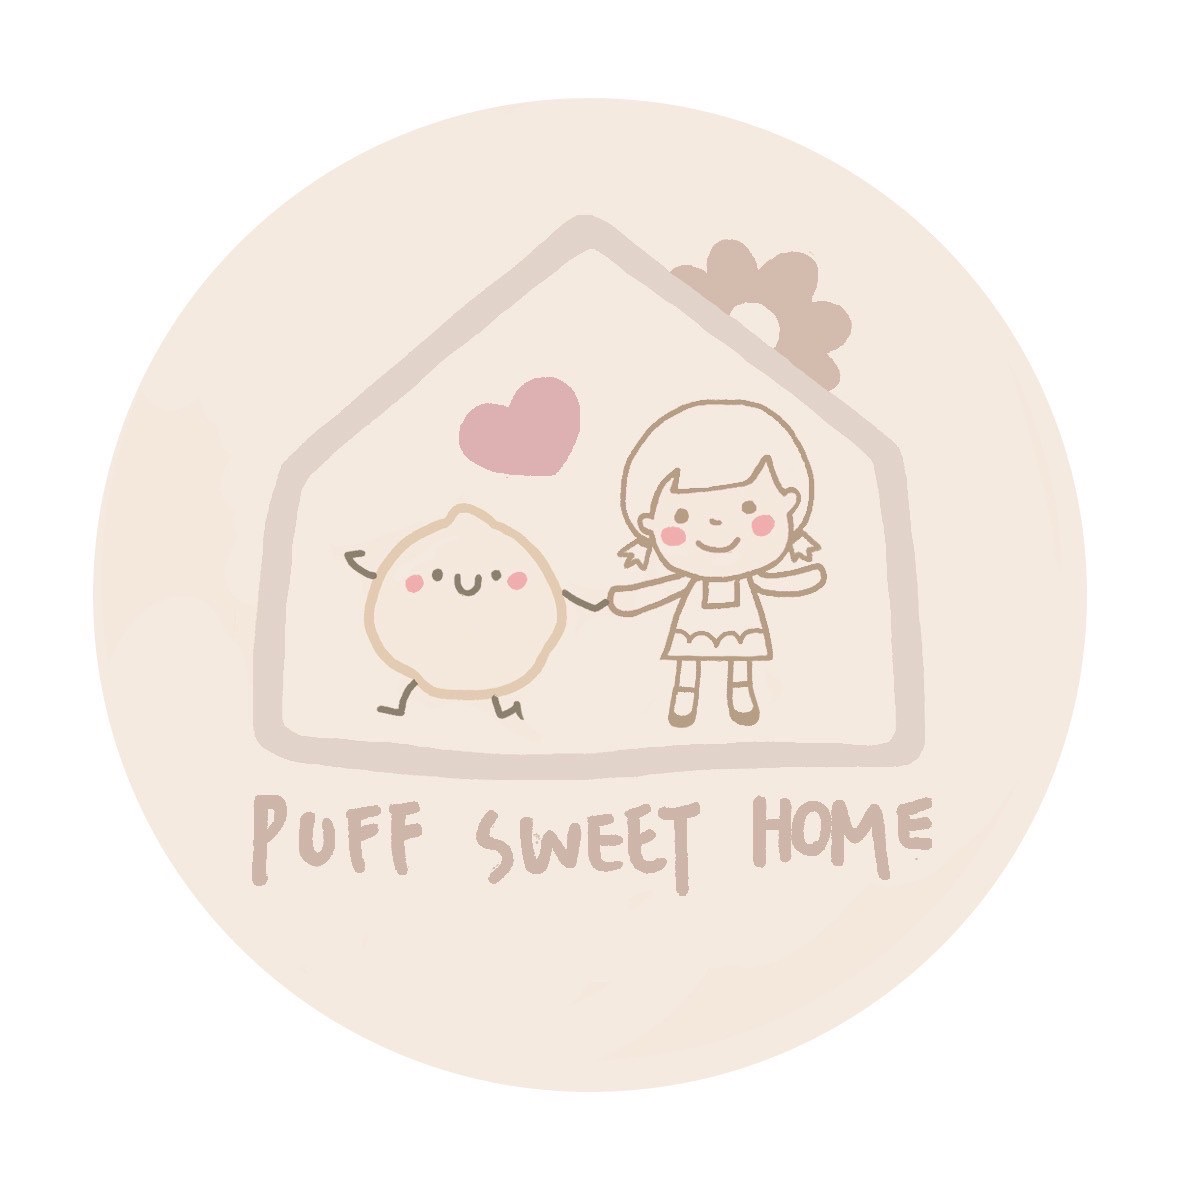 Puff sweet home